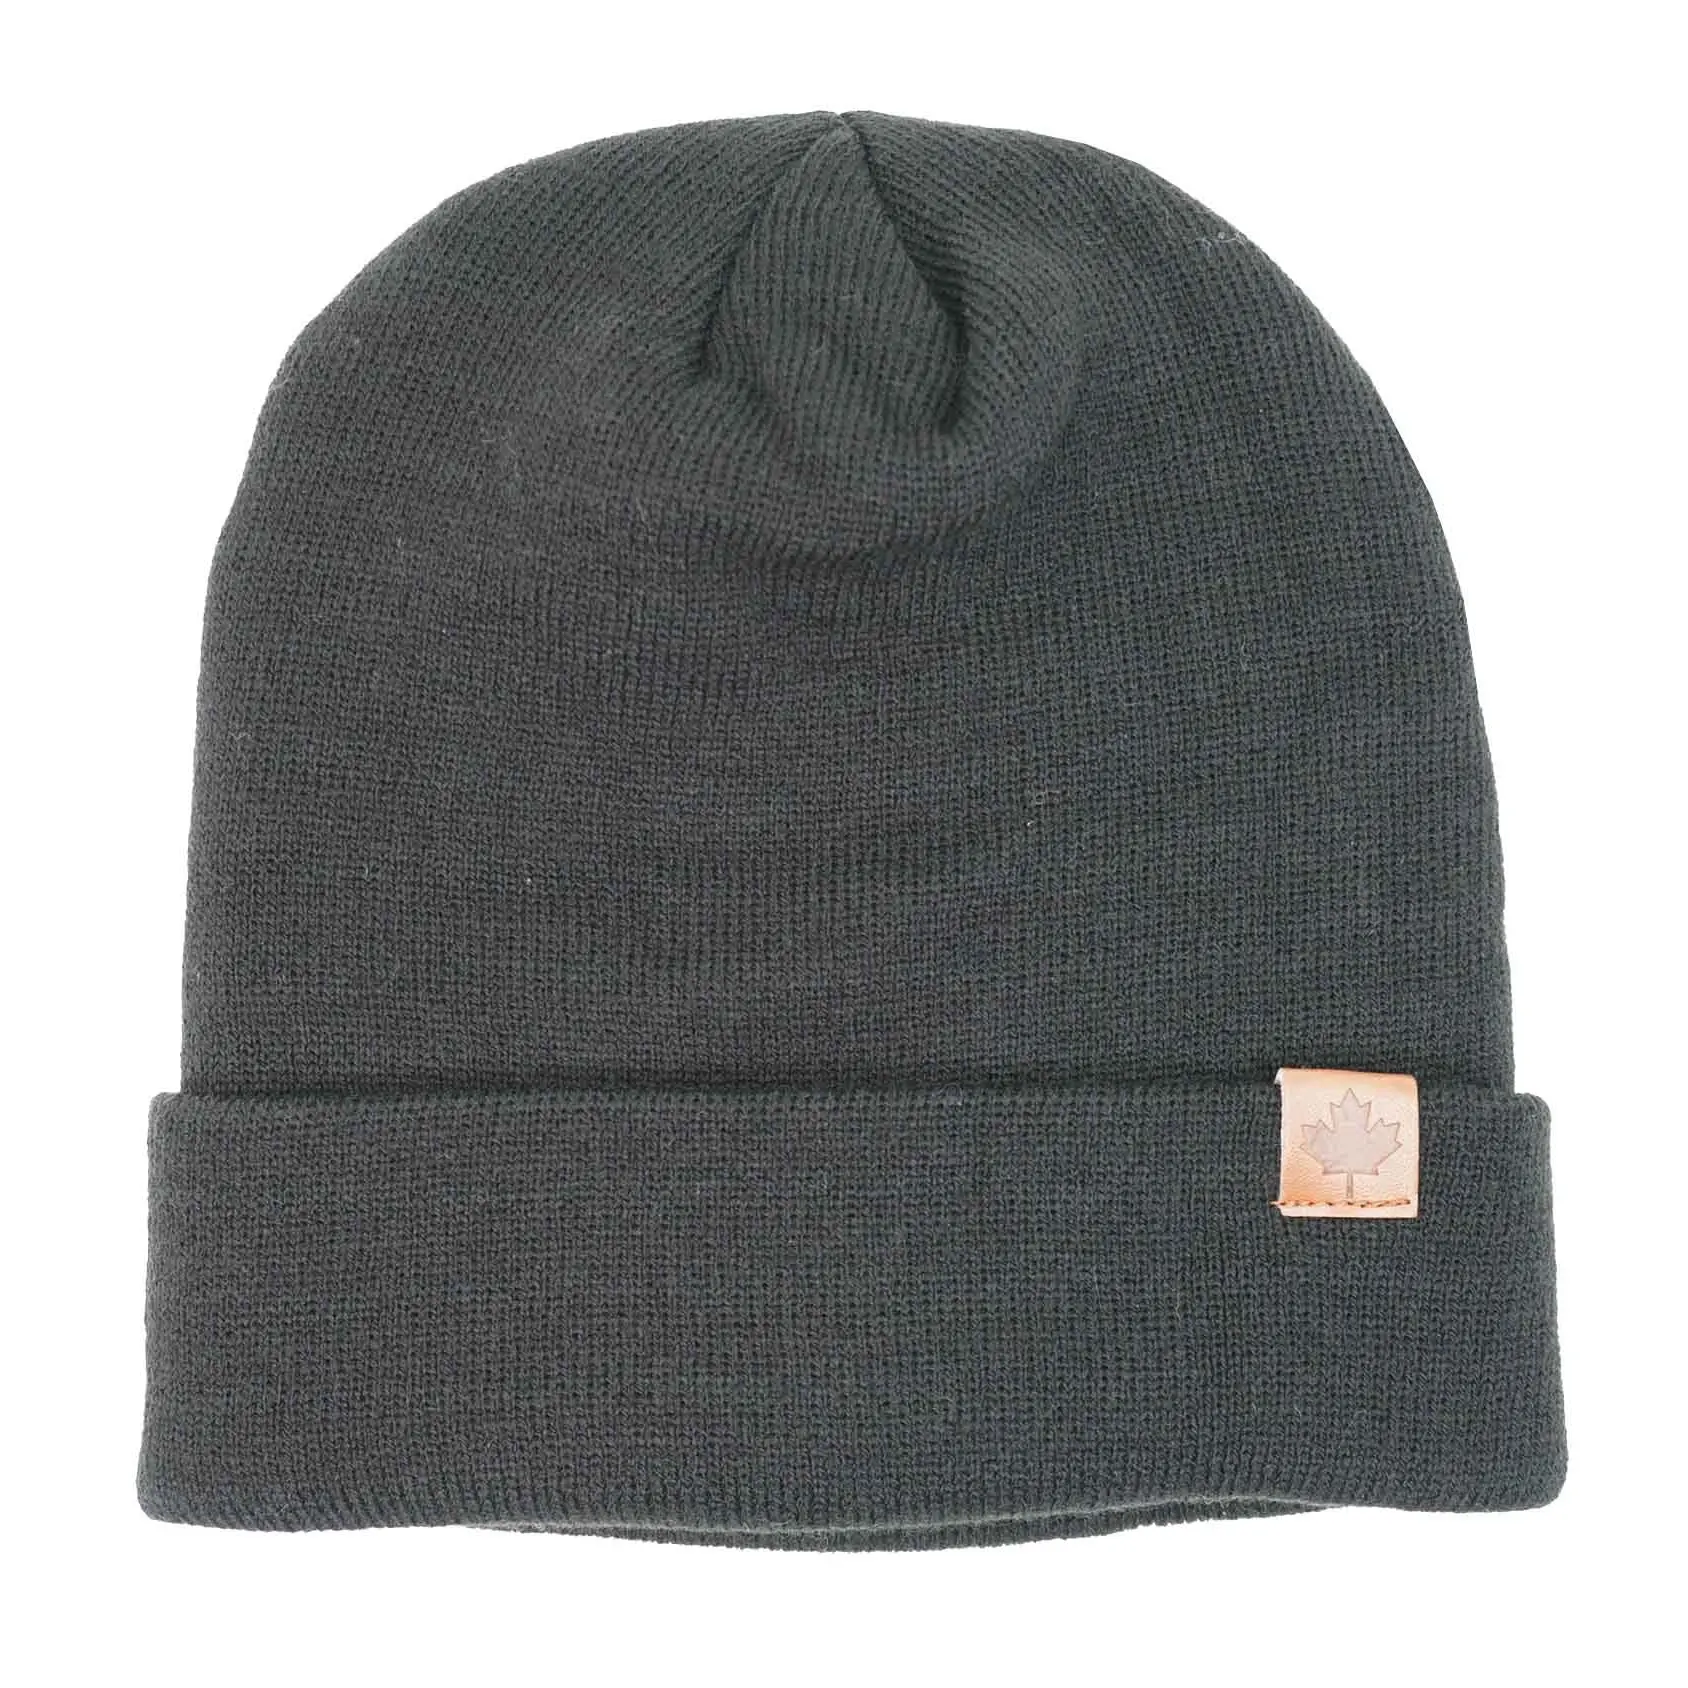 Wholesale Custom Factory Price Winter Warm Hat Sport Running Beanie Hat Skiing Cap For Men And Women